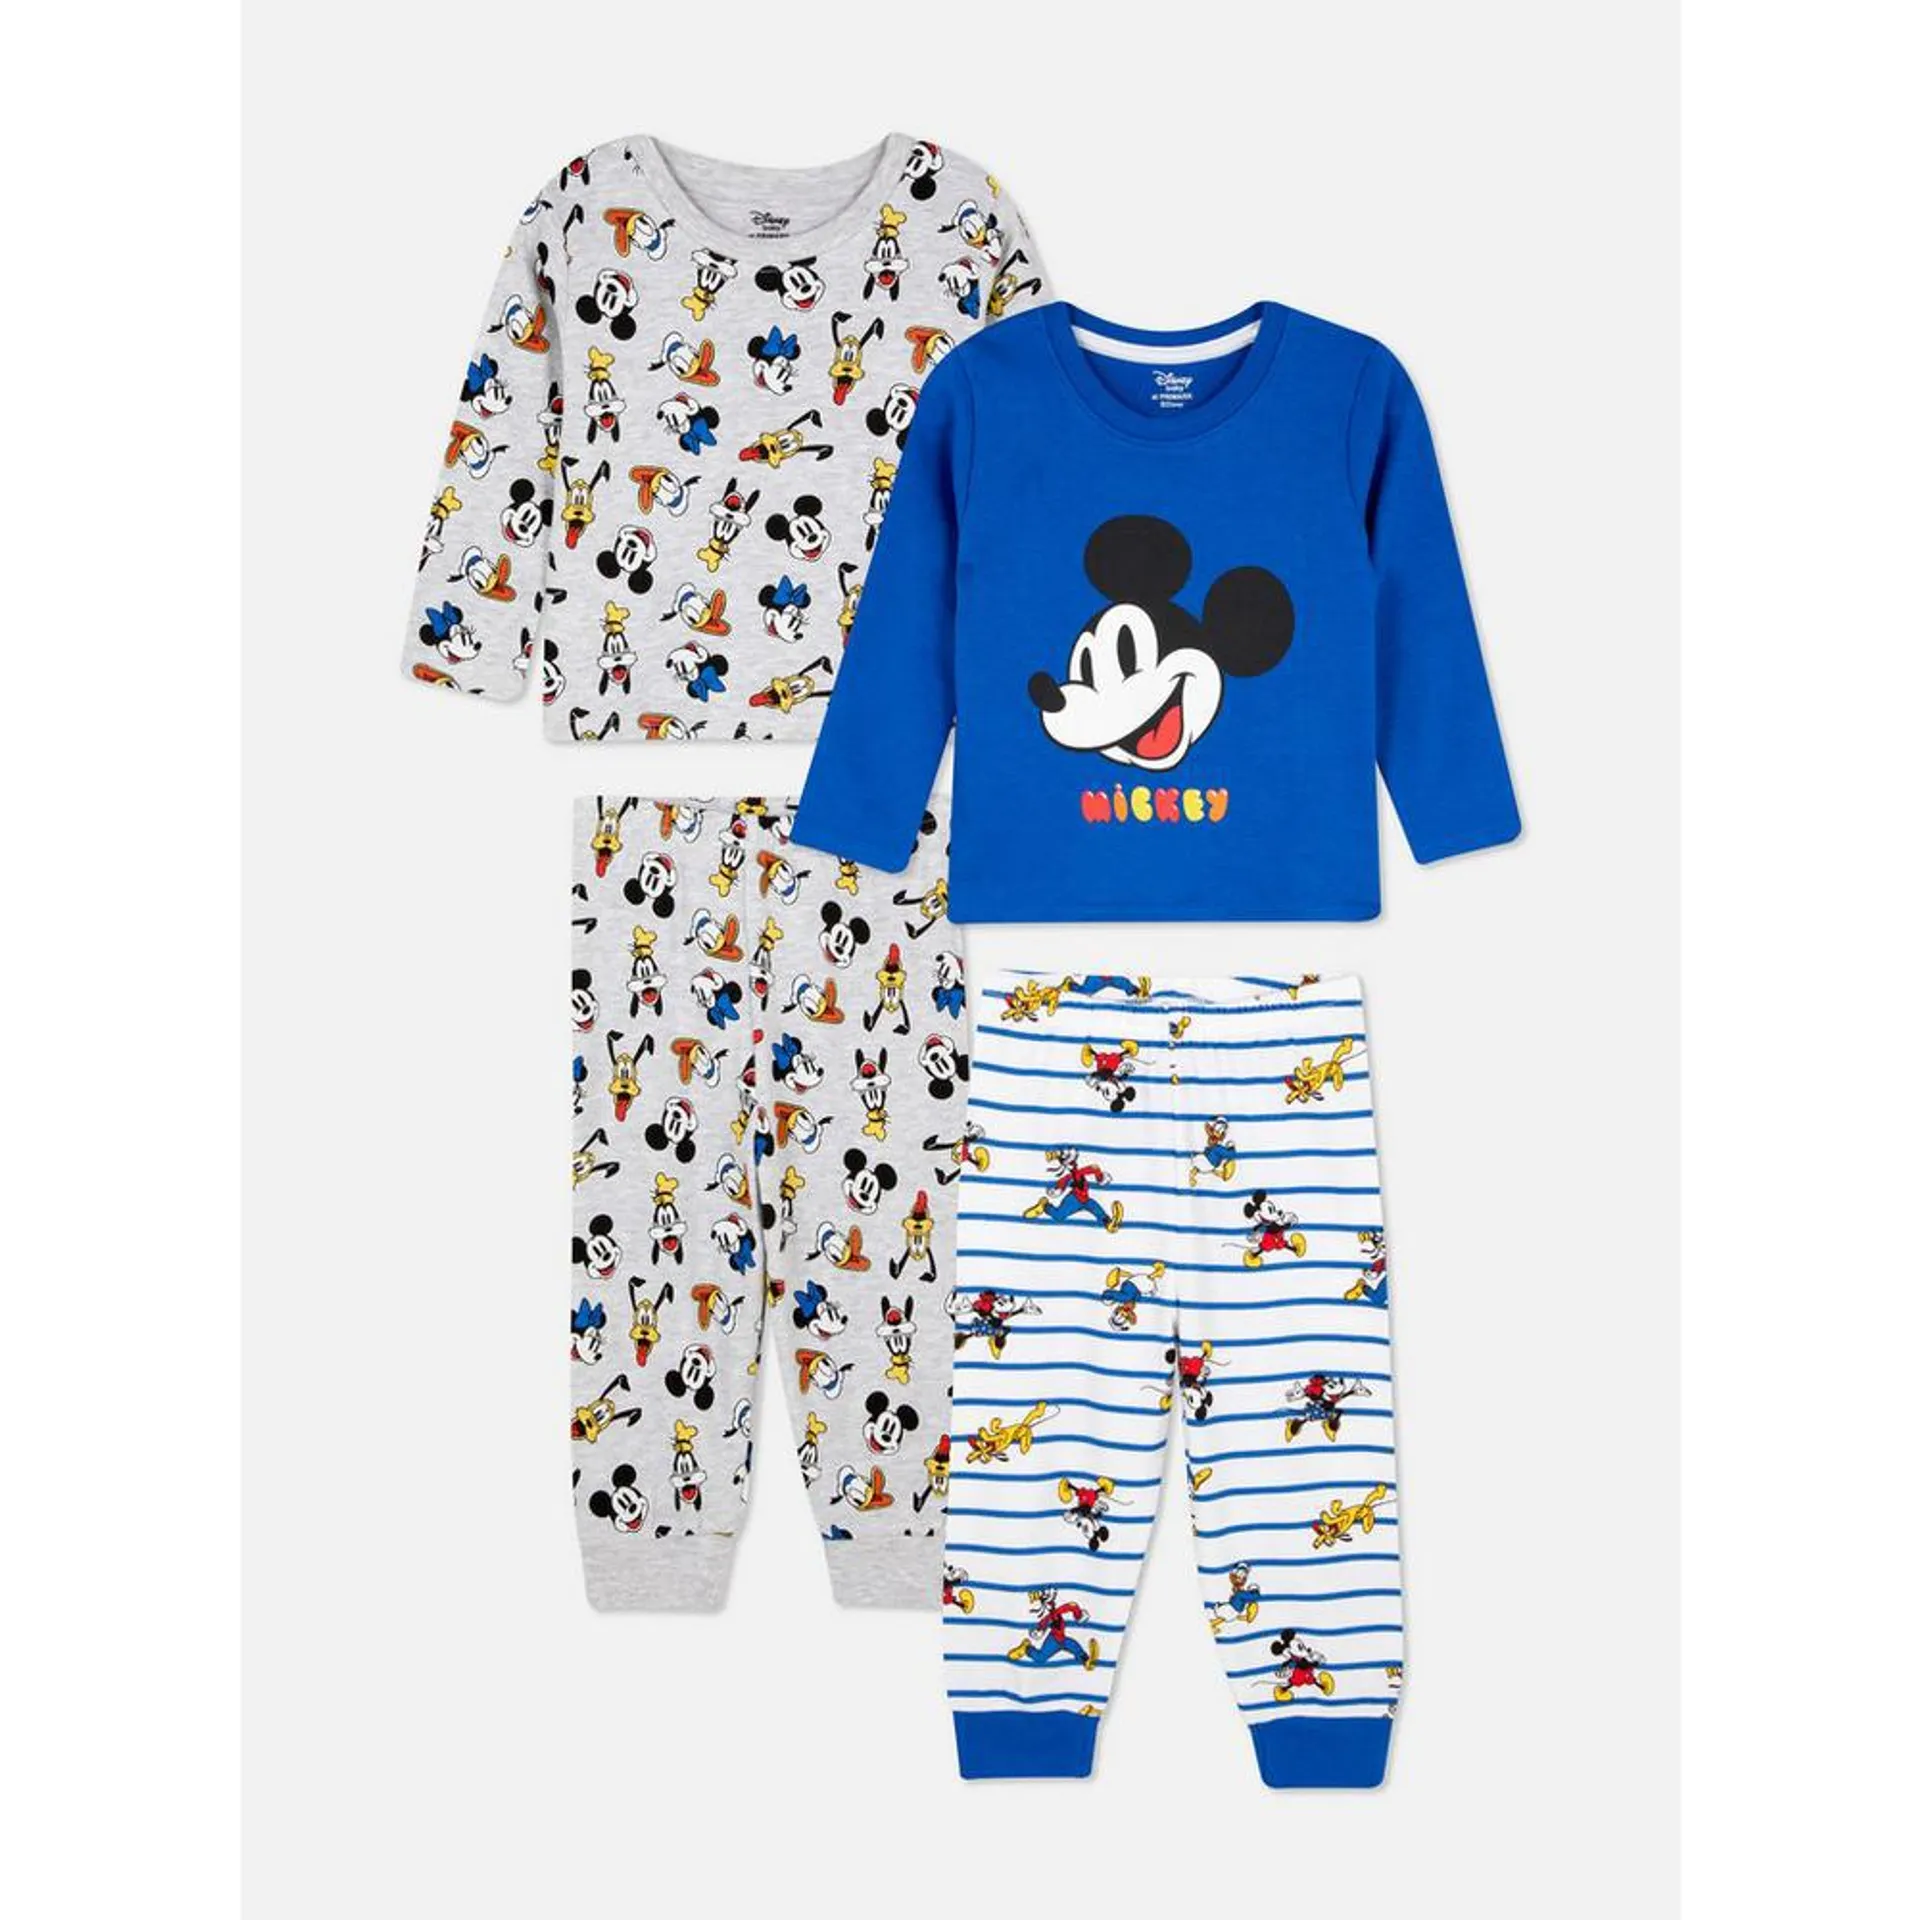 „Disney Micky Maus und Freunde“ Pyjama, 2er-Pack